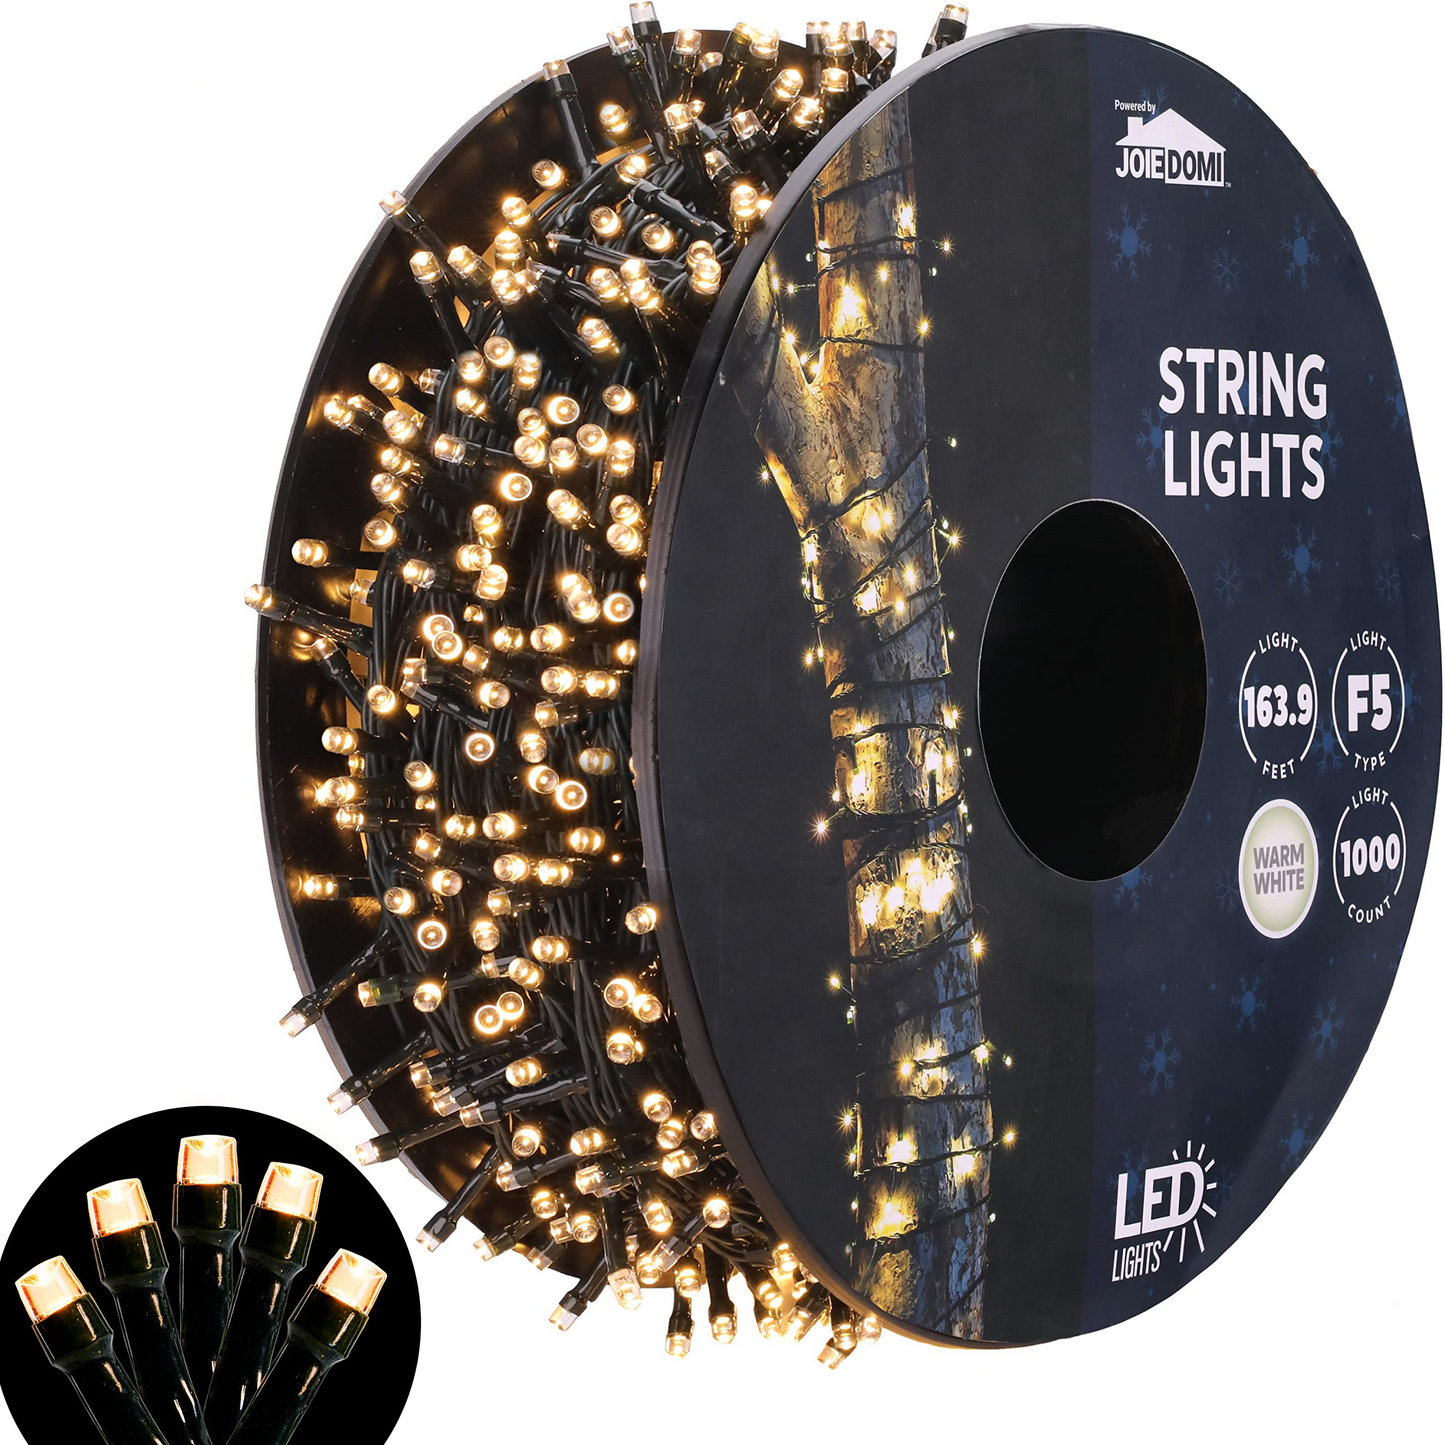 1000 LED Christmas String Lights Warm White